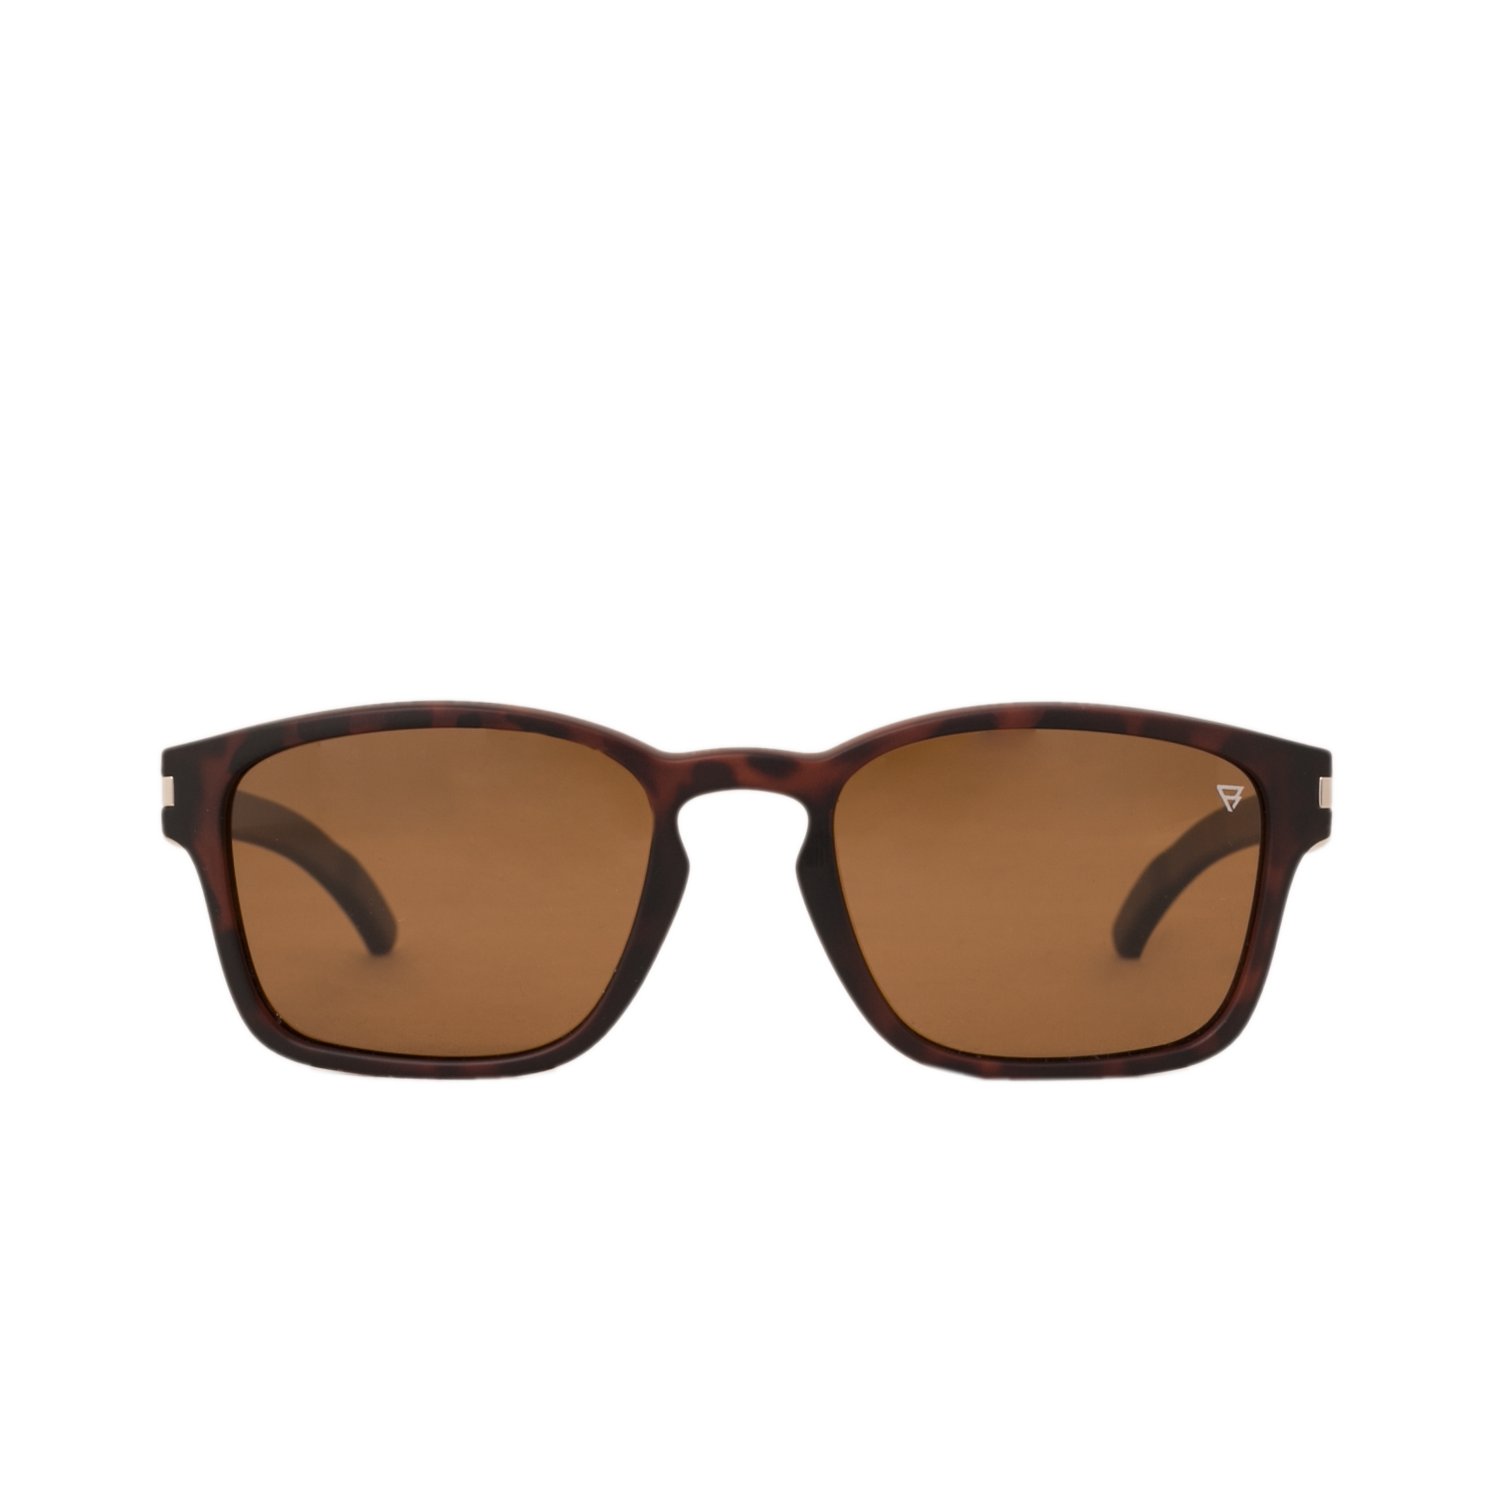 Everest 2 Unisex Sunglasses | Braun